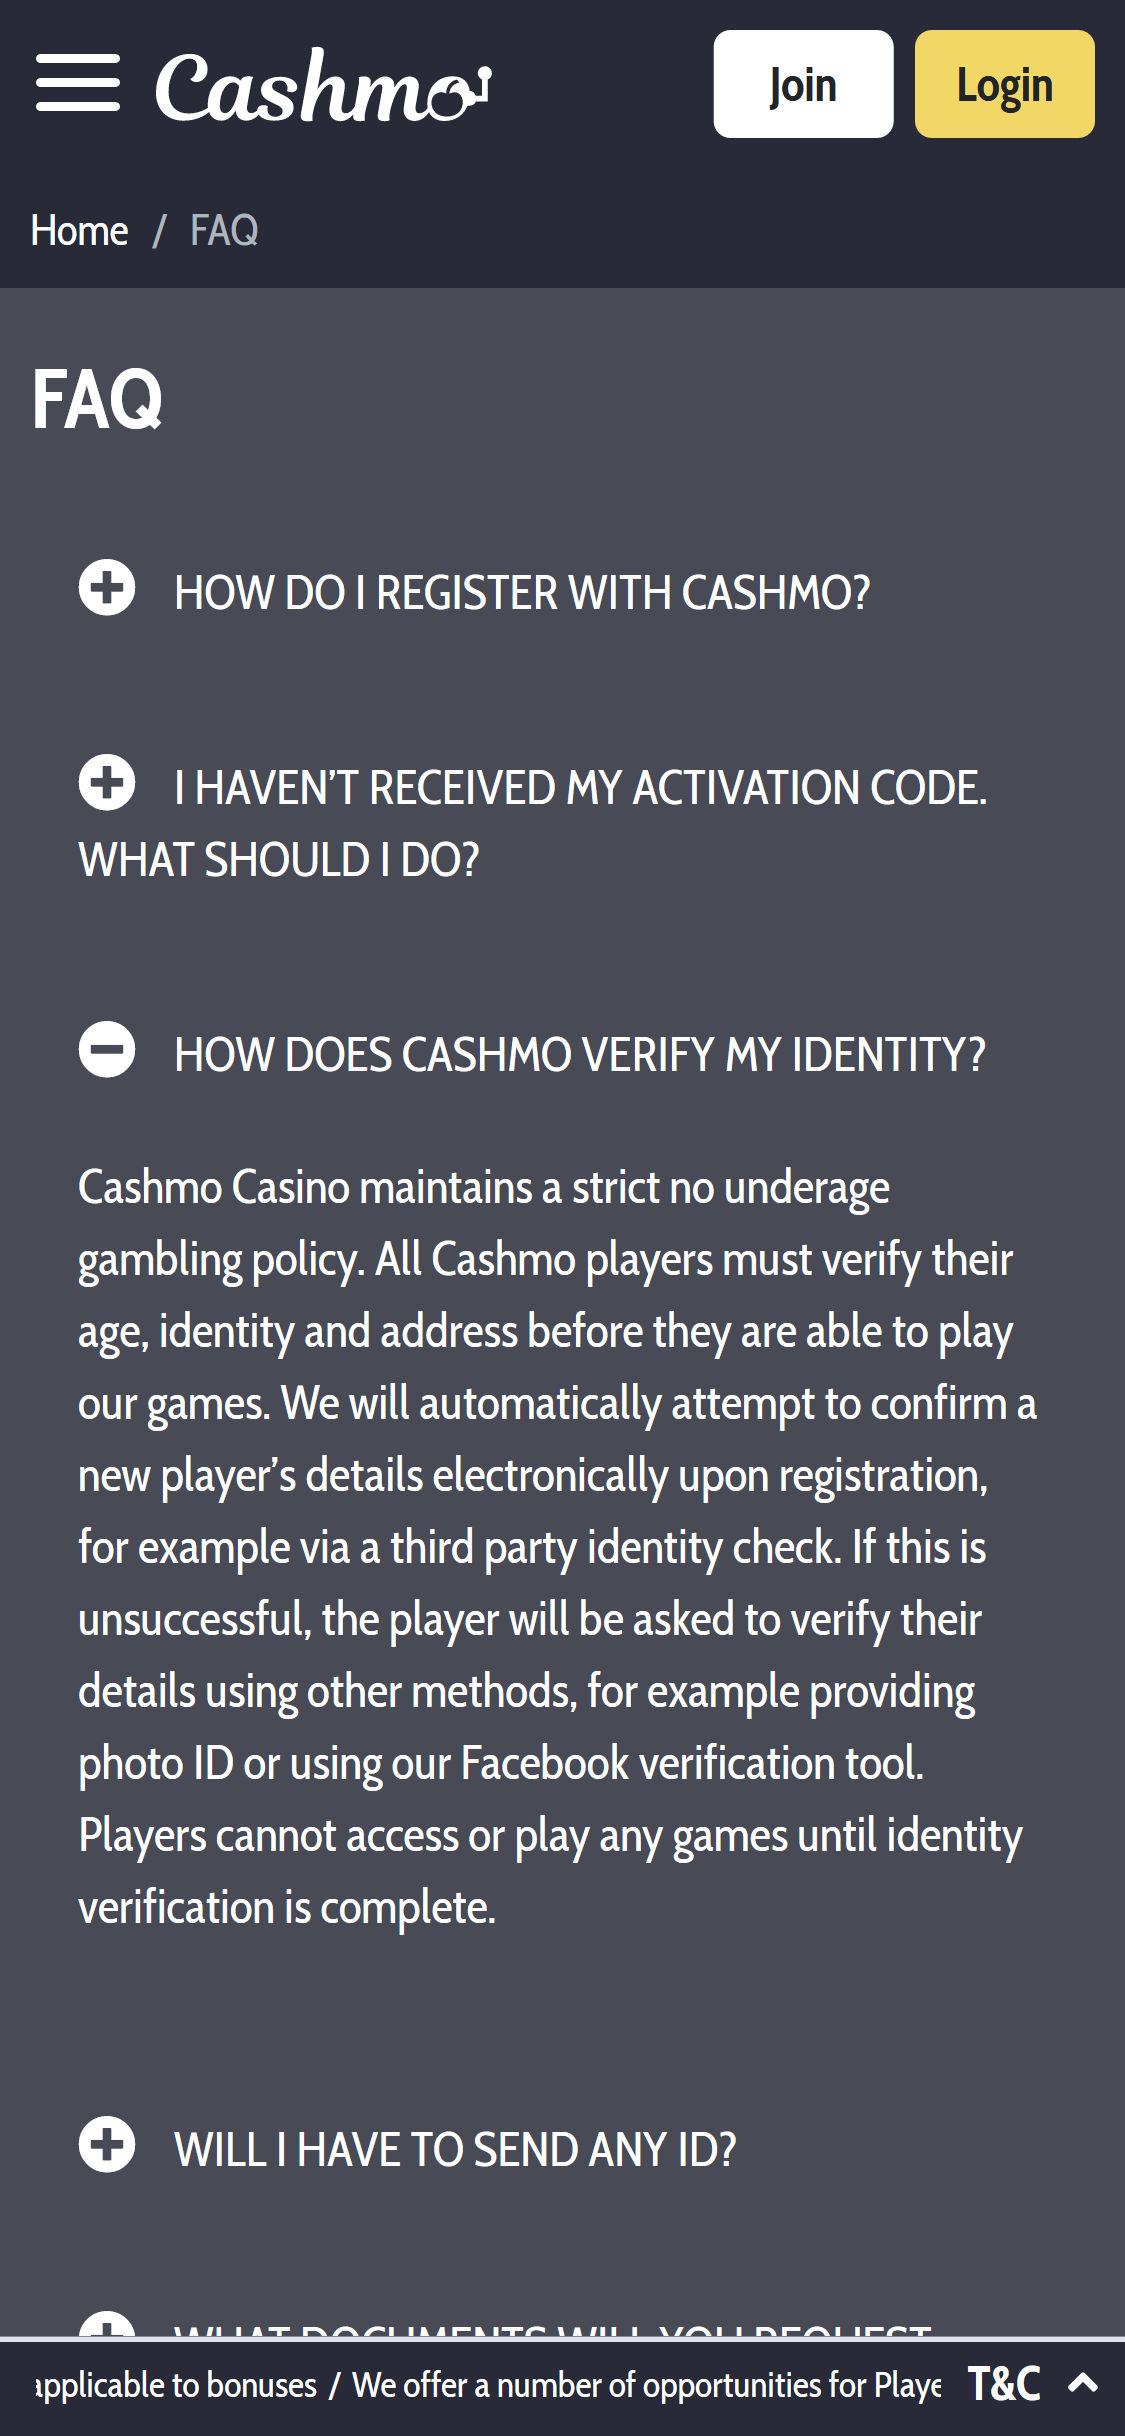 Cashmo Casino Mobile Support Review